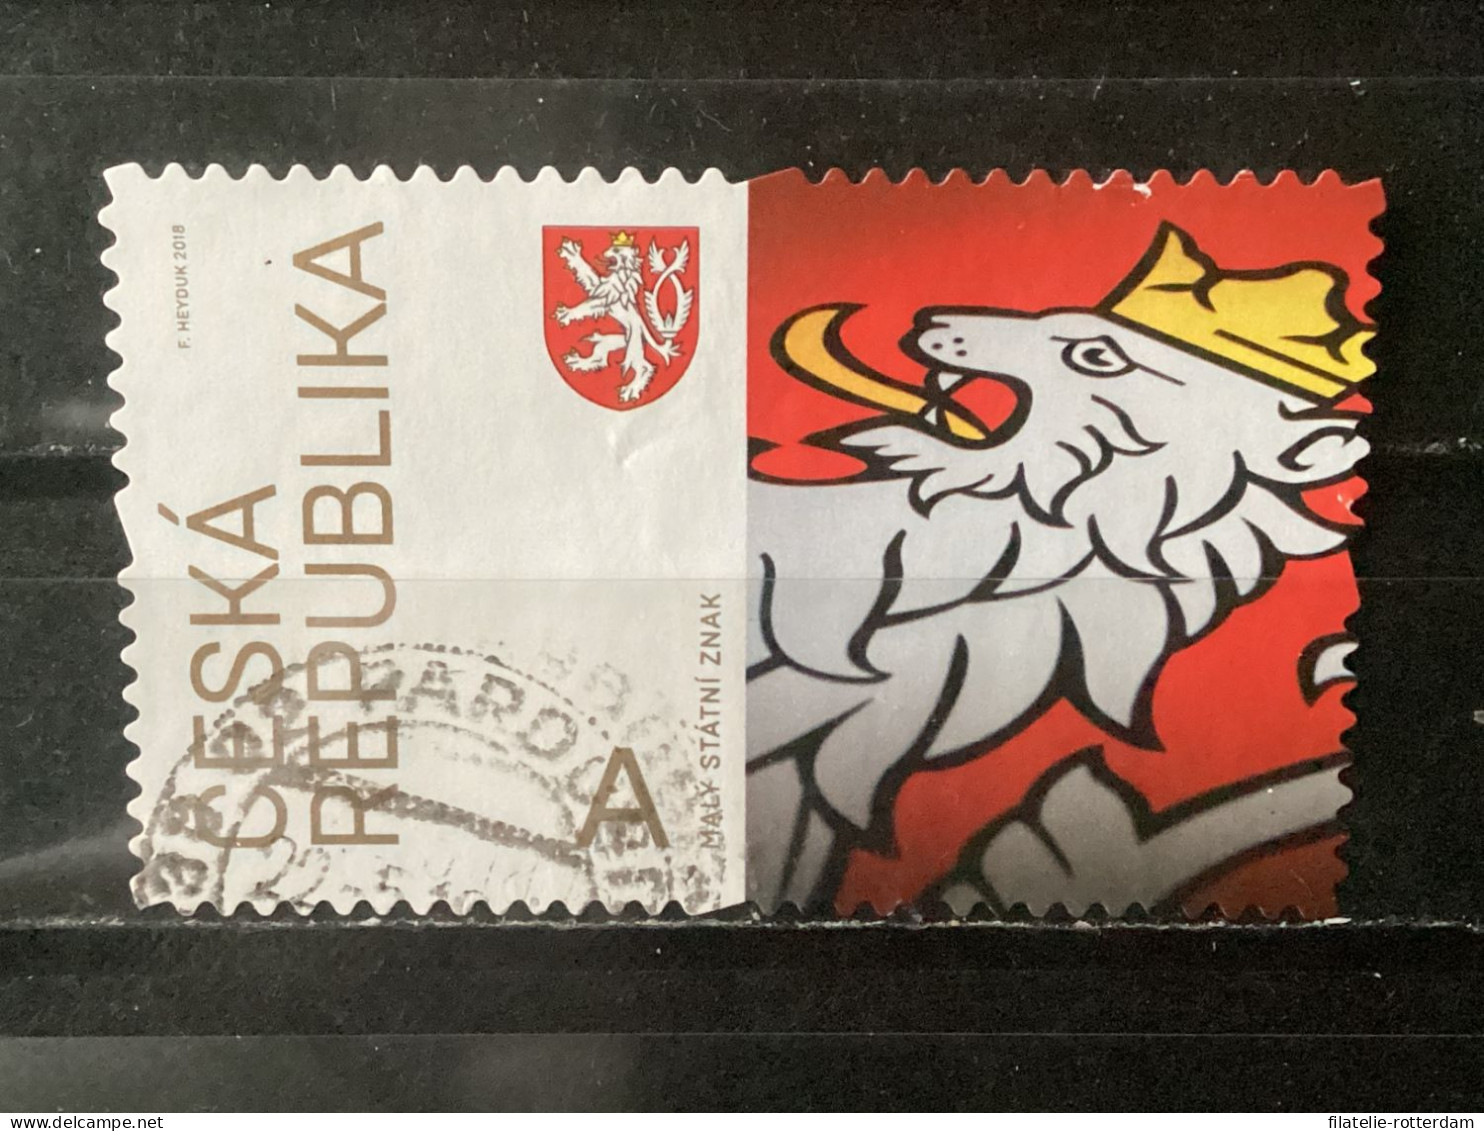 Czech Republic / Tsjechië - National Symbols (A) 2018 - Gebraucht